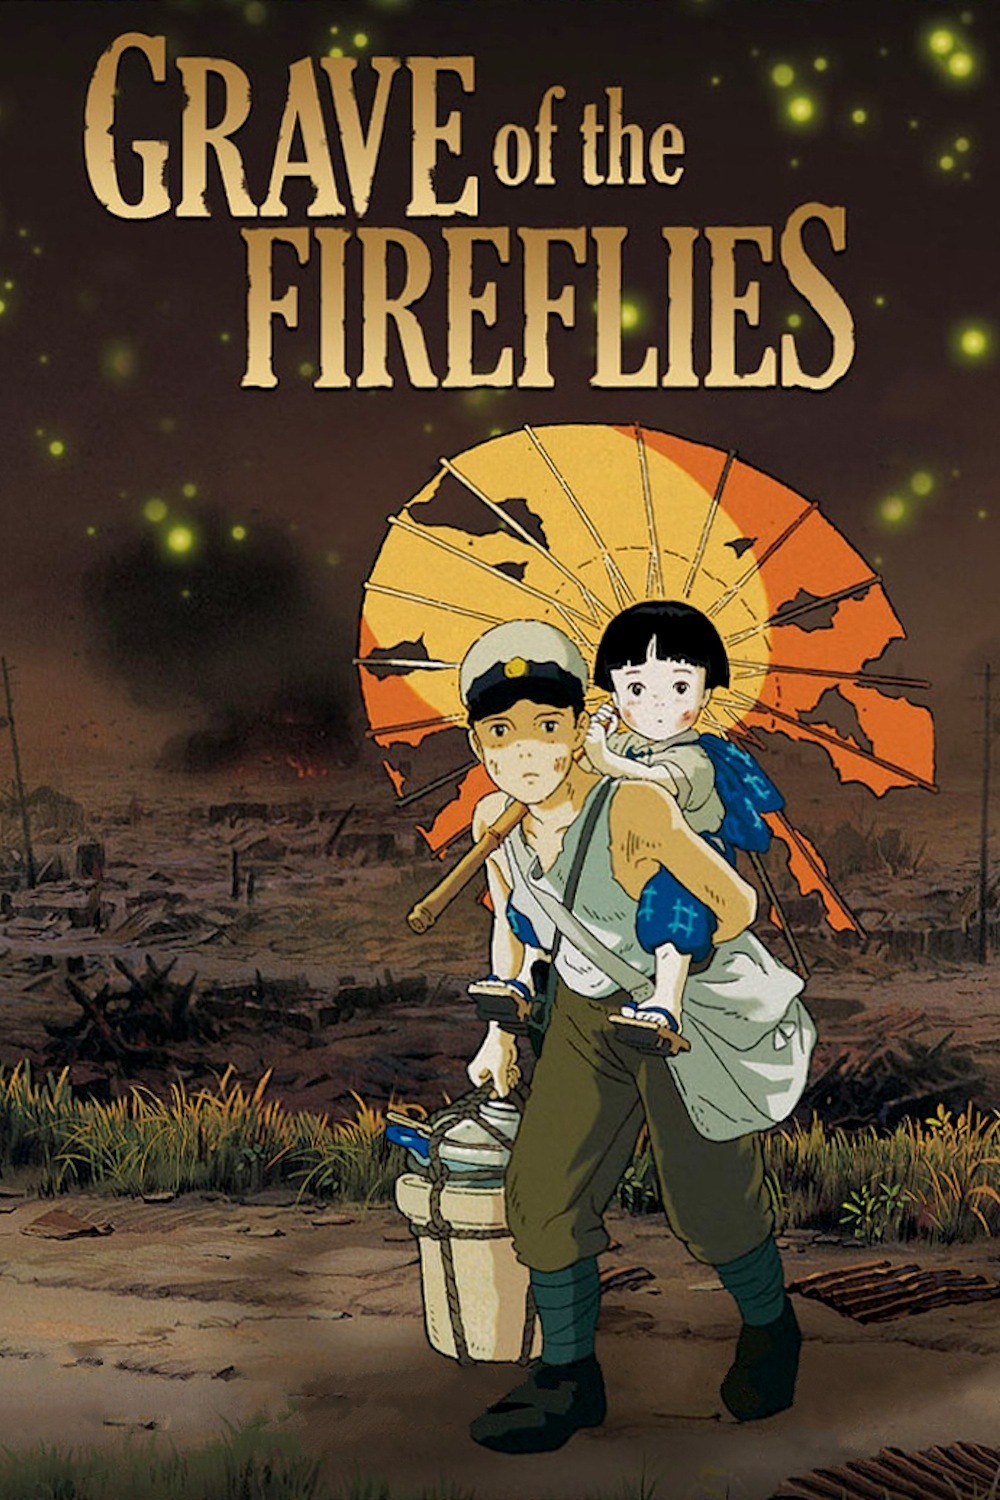 https://dalkomlollipop.files.wordpress.com/2014/08/grave-of-the-fireflies-cover.jpg